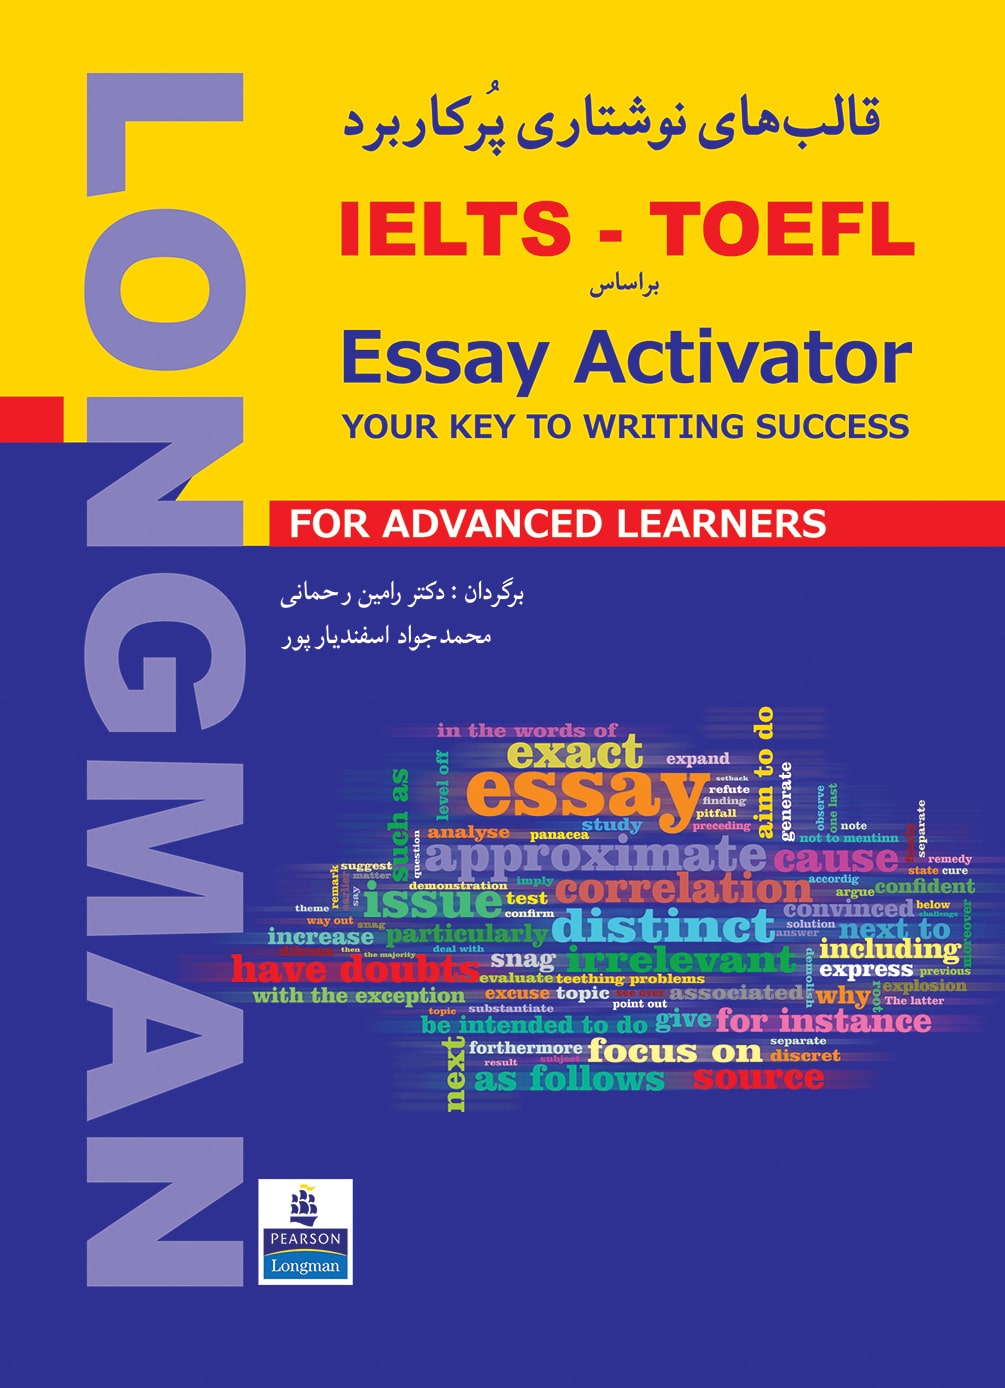 longman essay activator.pdf download